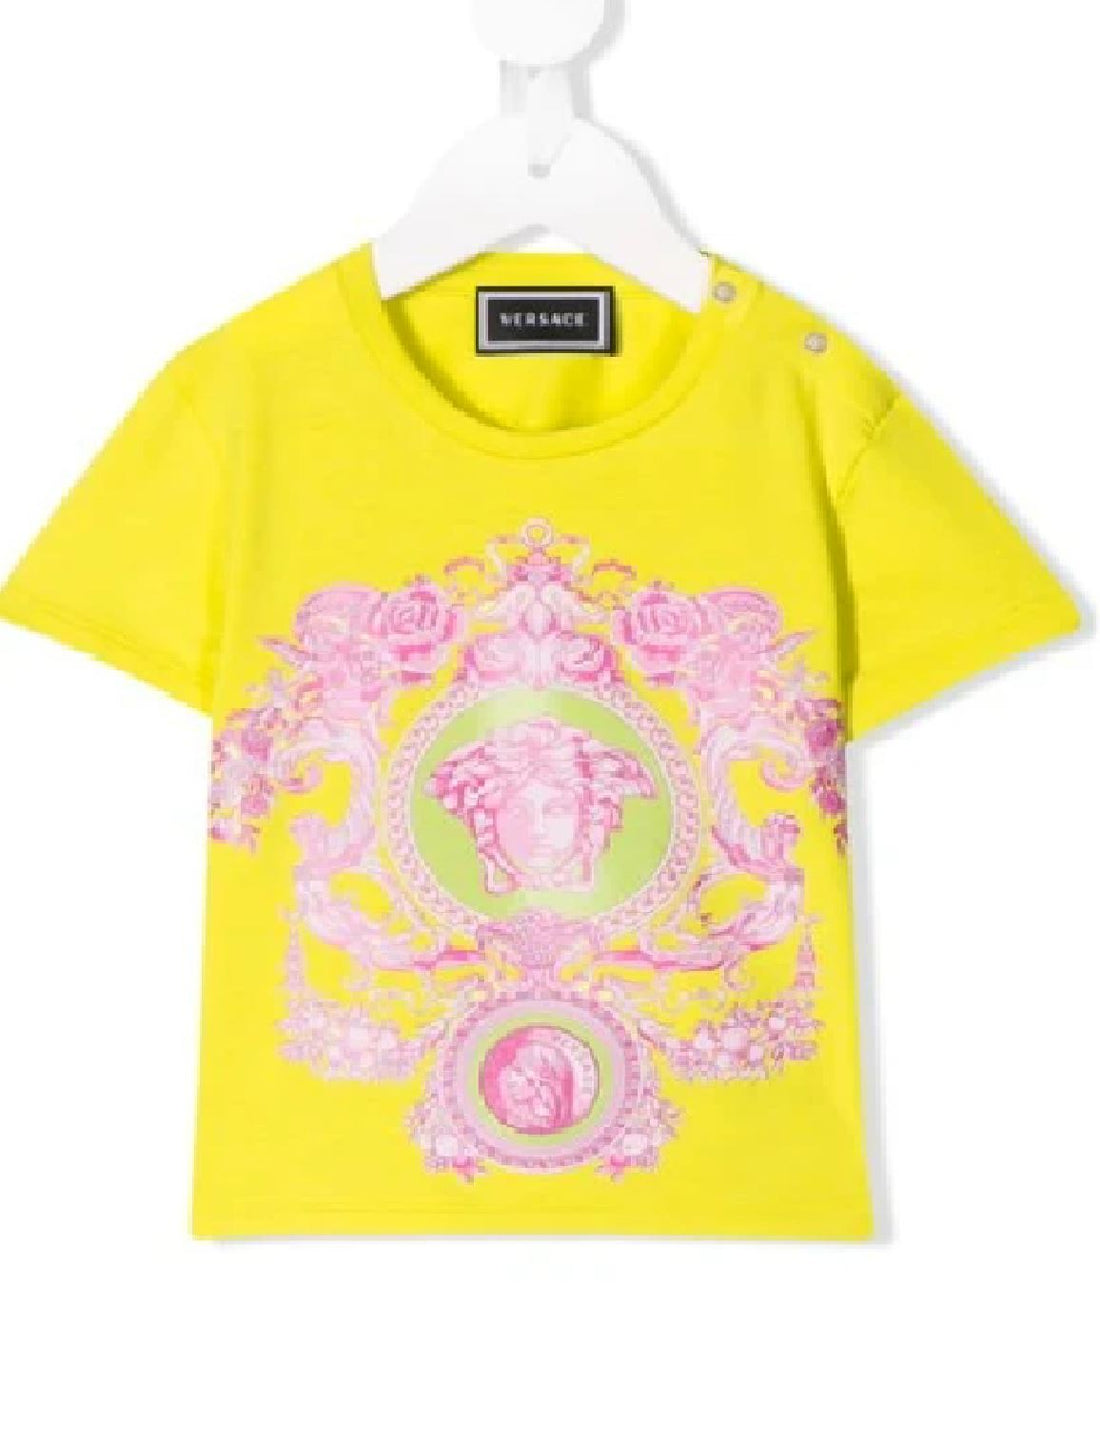 YOUNG VERSACE Medusa logo T-shirt - Maison De Fashion 